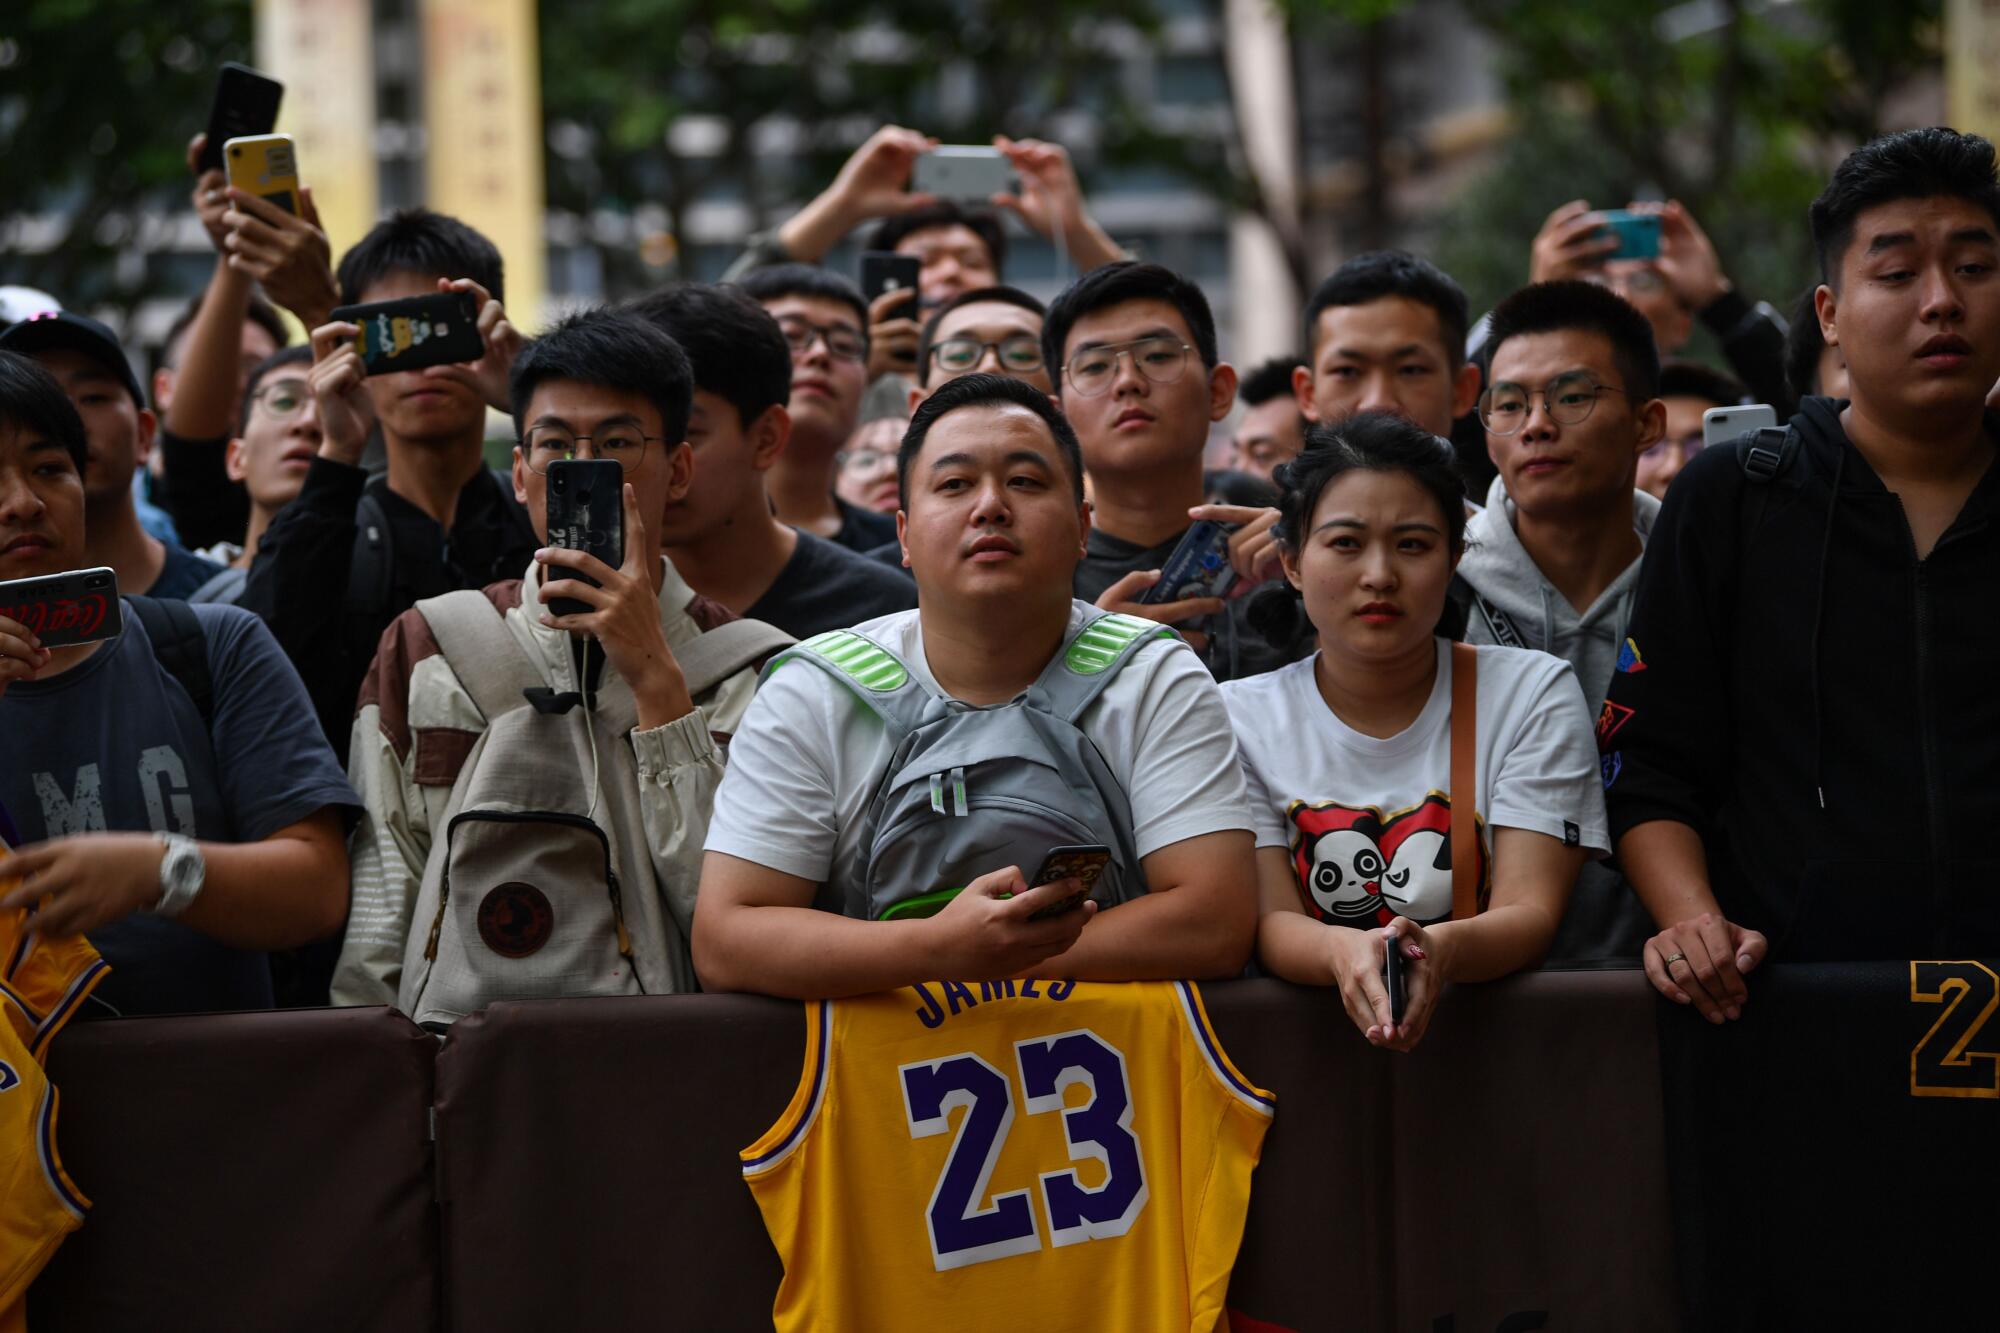 Lakers fans in Shanghai